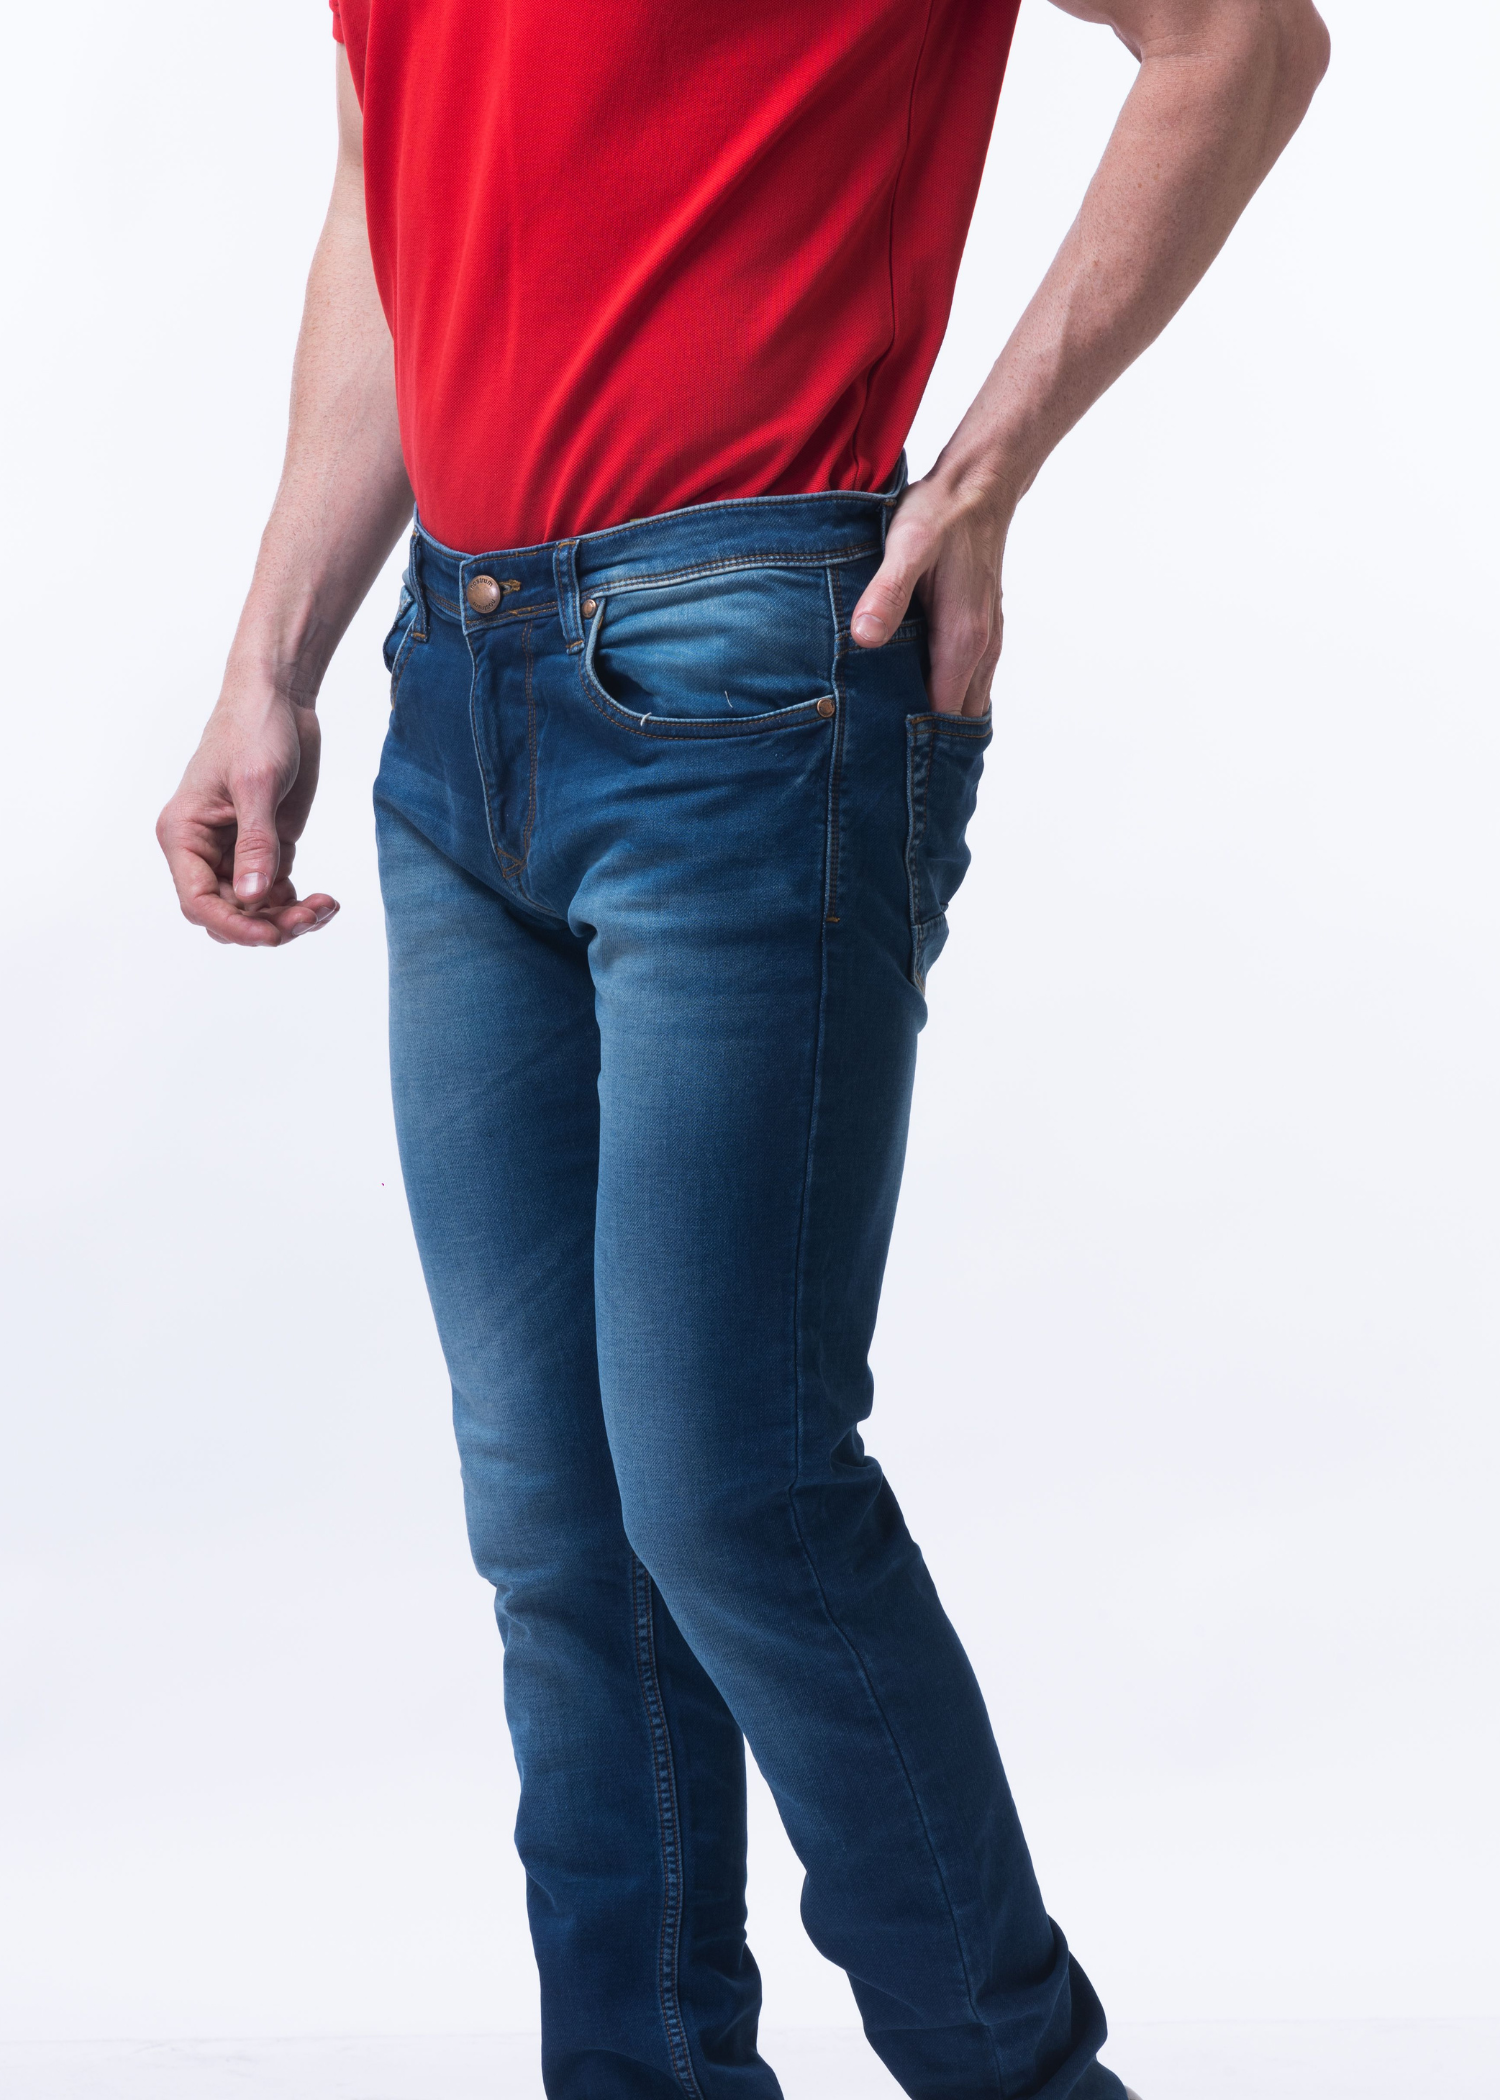 Darwin Ankle Fit Blue Denim Jeans For Men - Nostrum Fashion